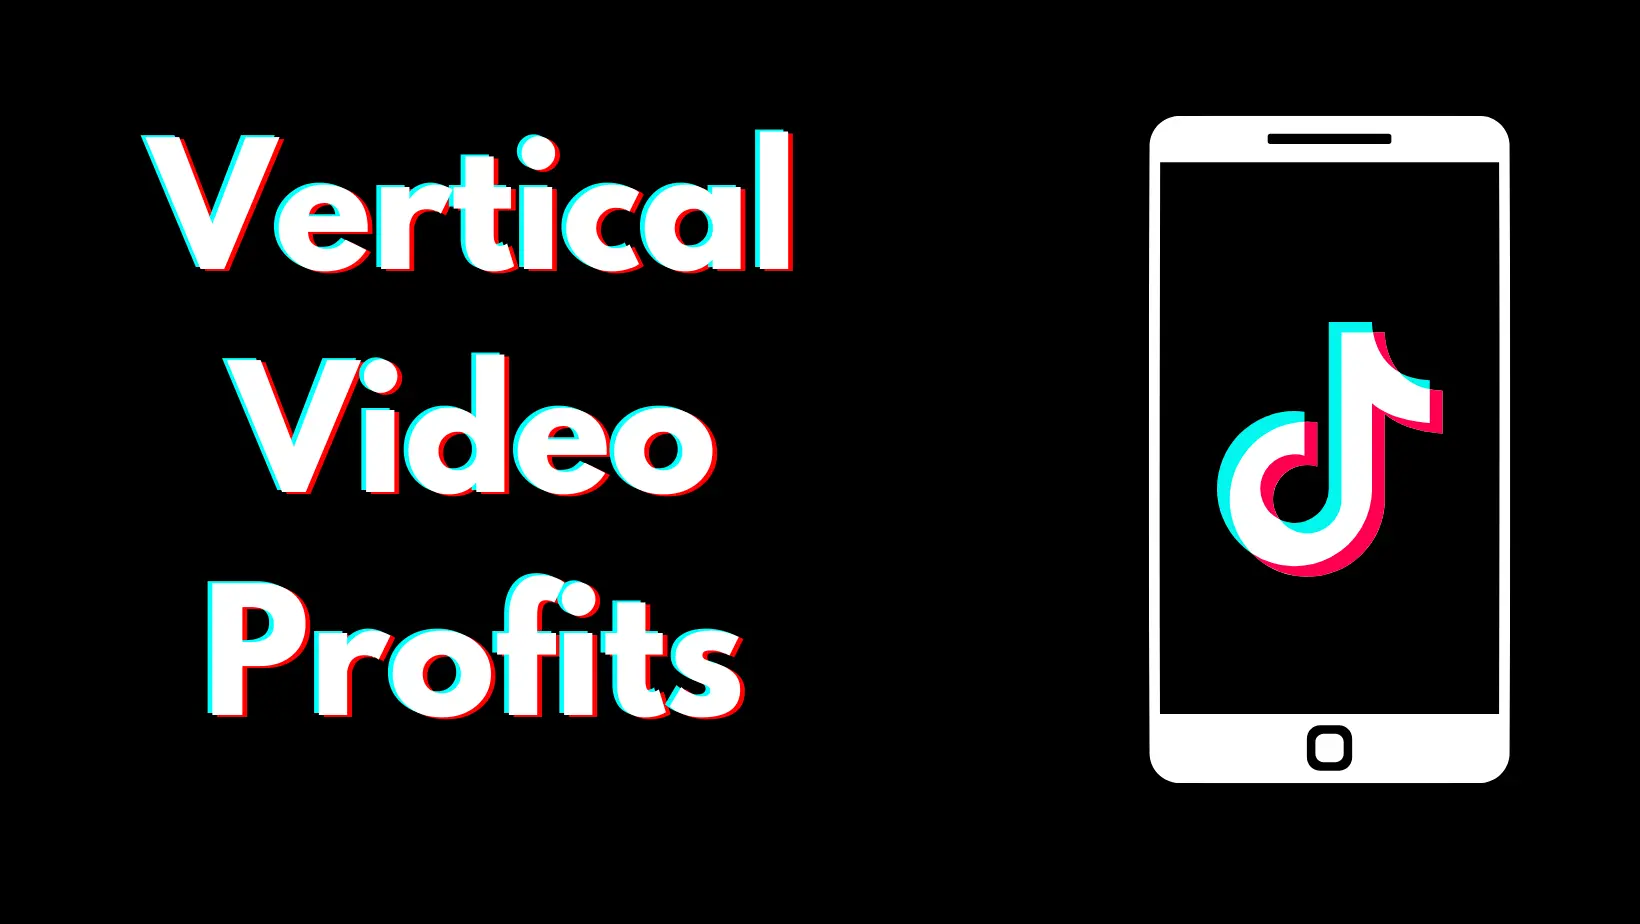 Vertical Video Profits black